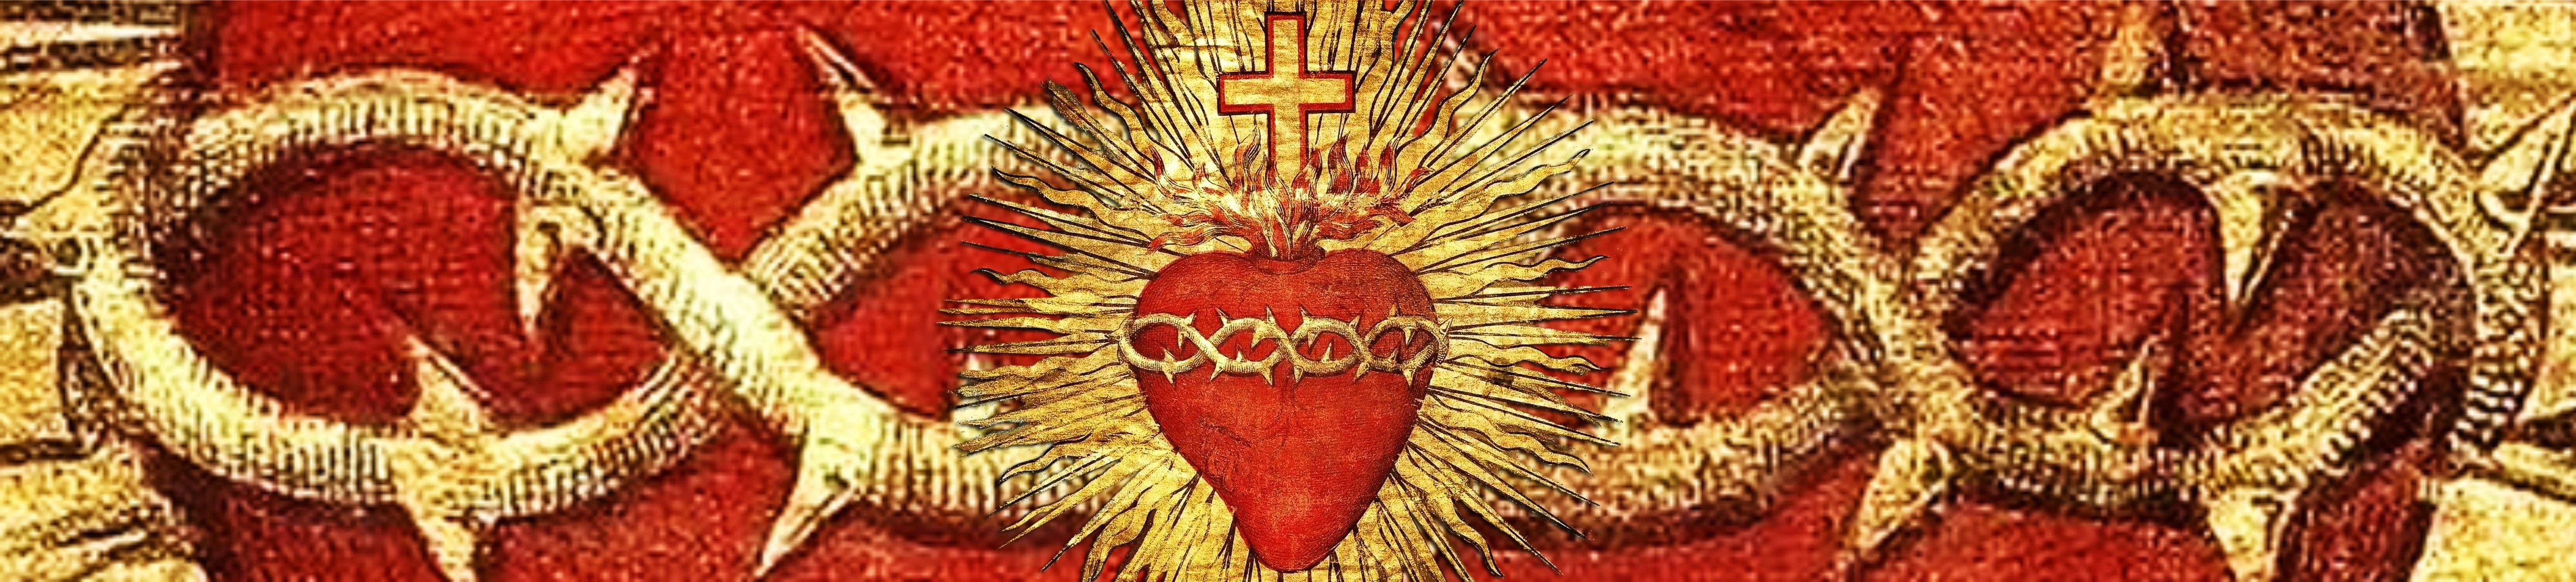 sacred-heart-of-jesus-banner.png